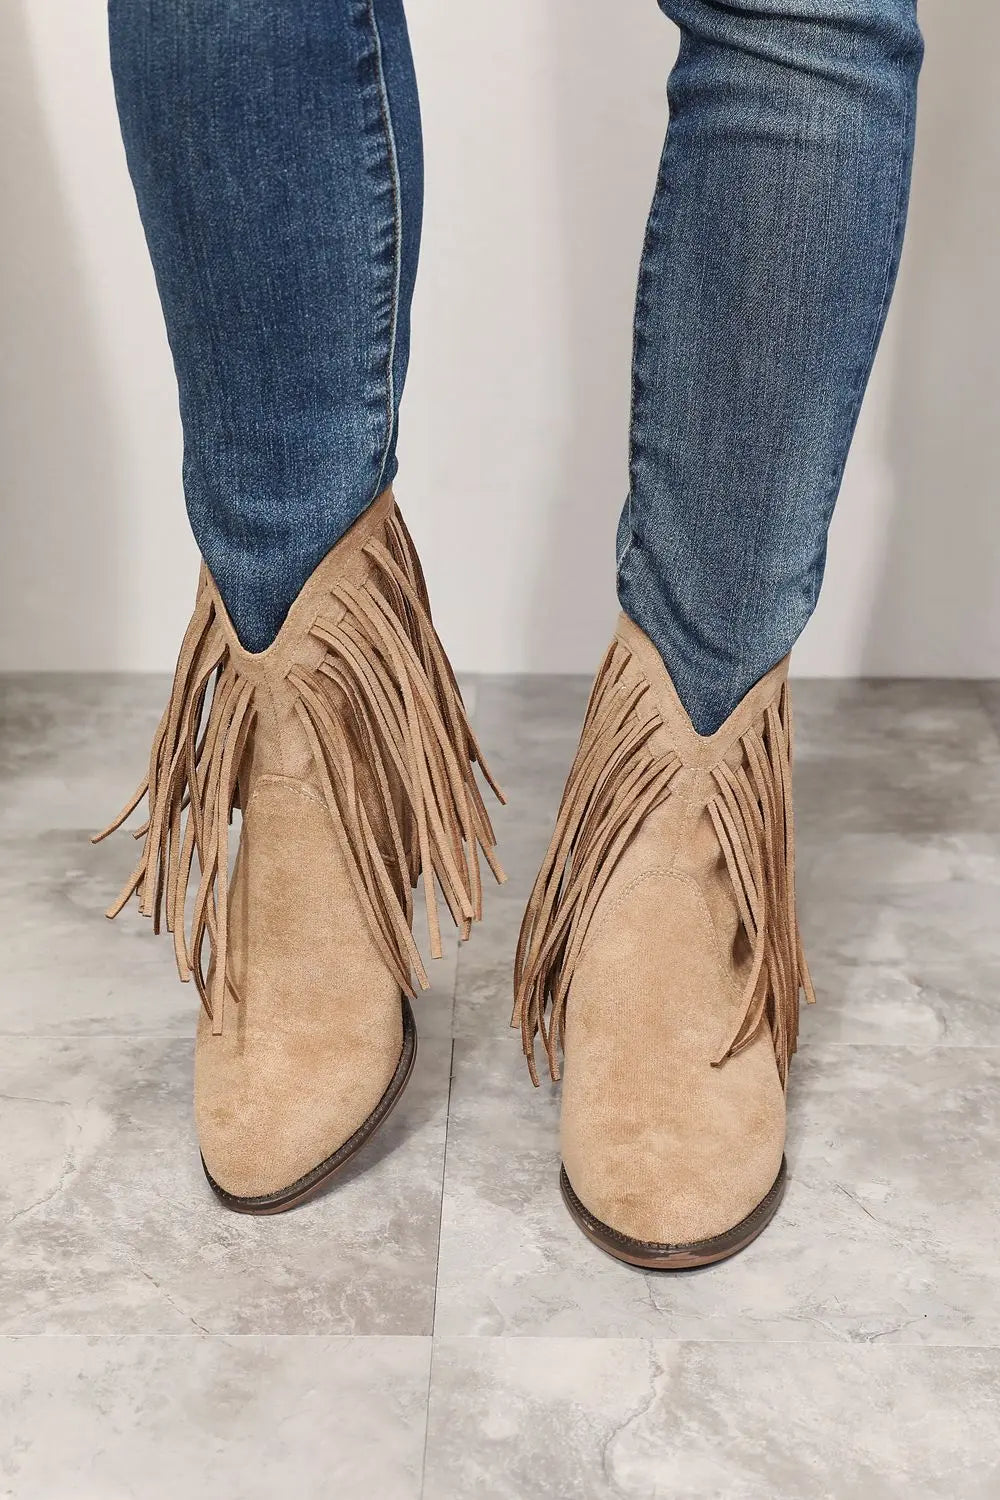 Legend Women's Fringe Cowboy Western Ankle Boots - Image #1